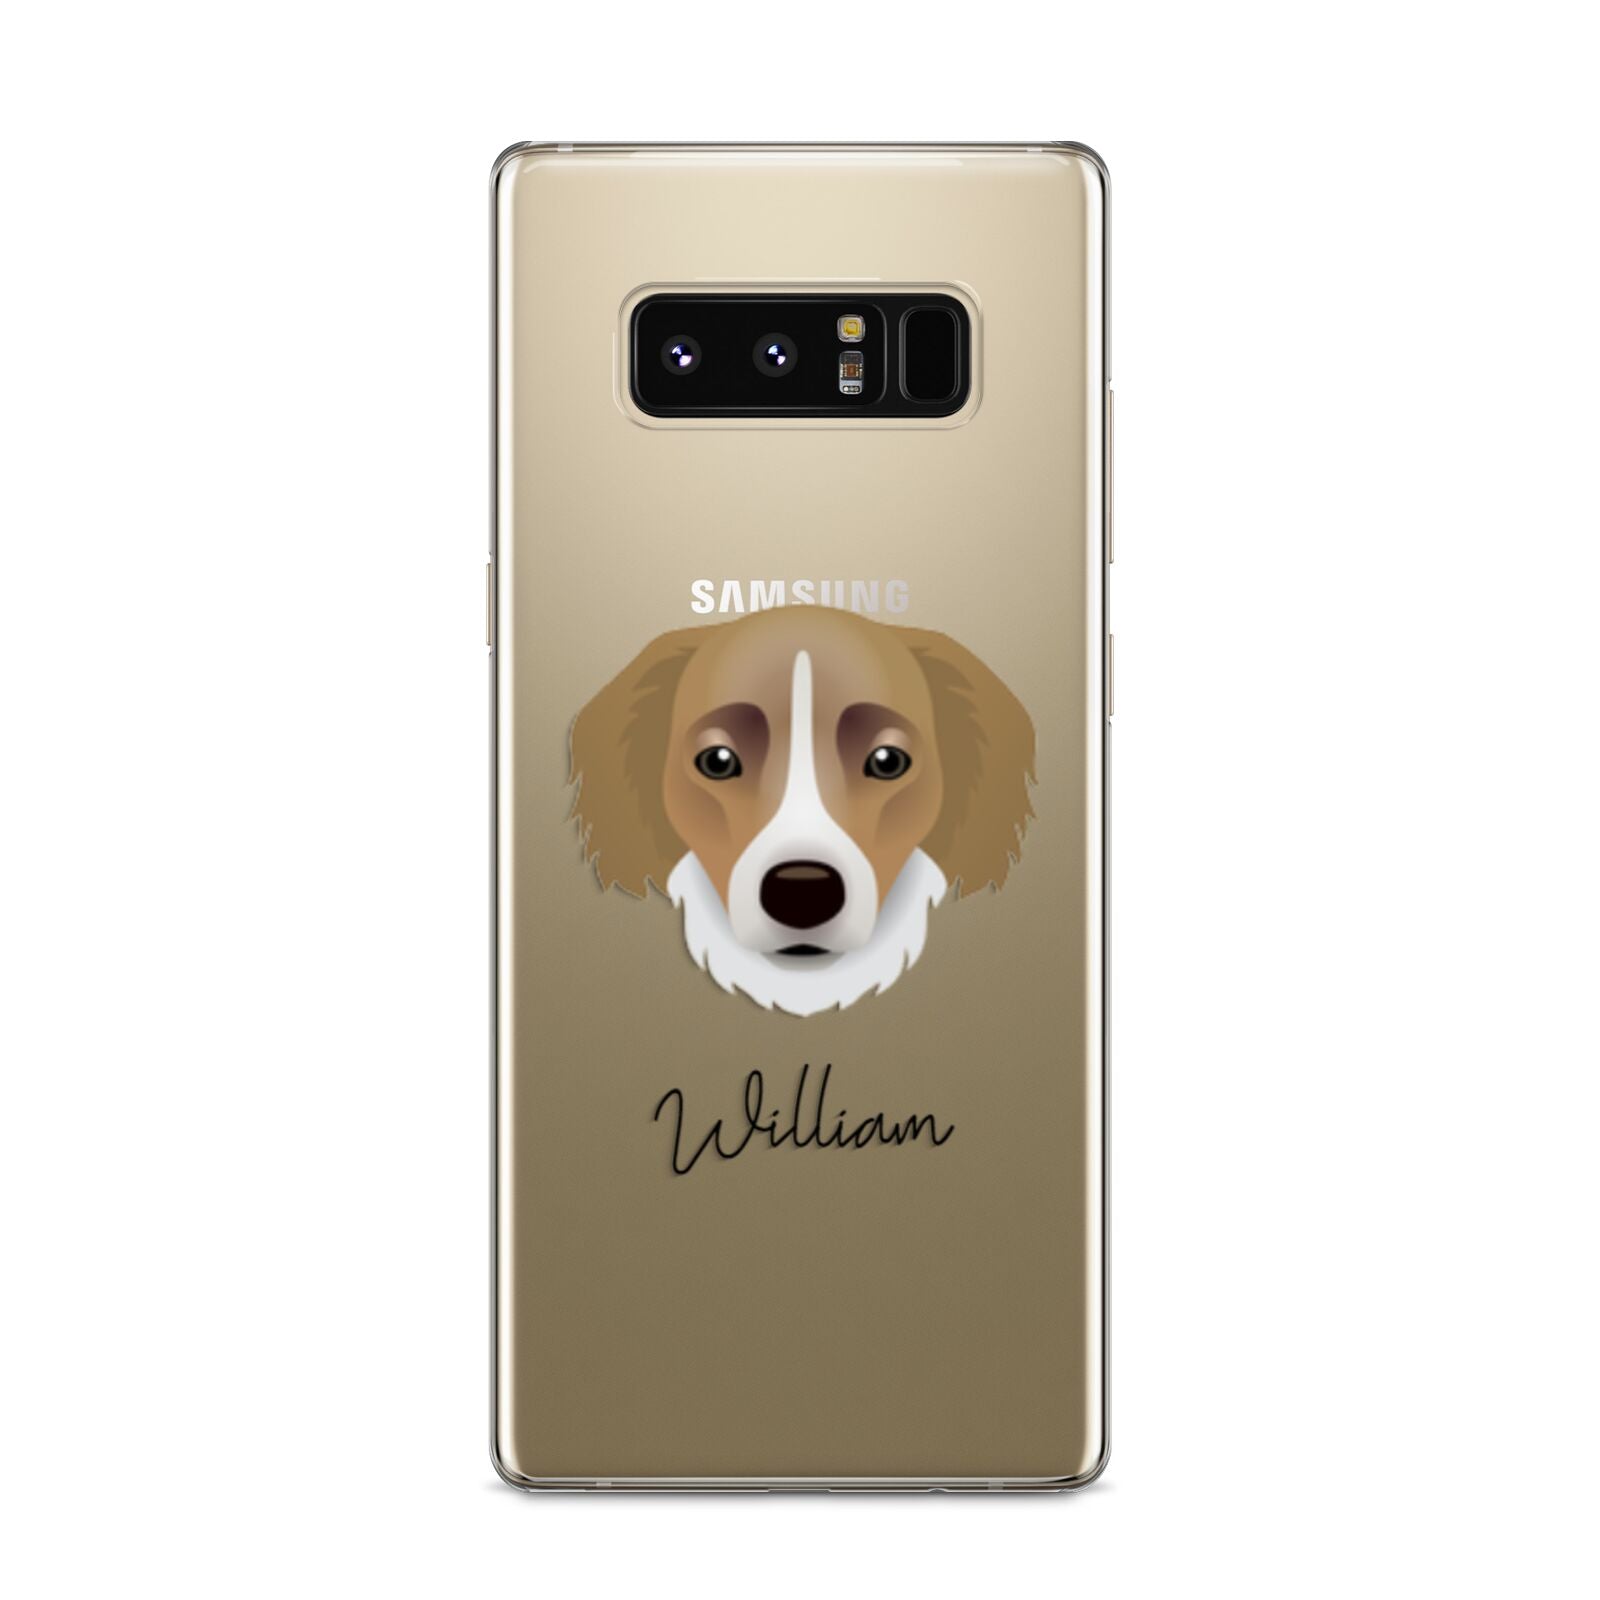 Siberian Cocker Personalised Samsung Galaxy S8 Case